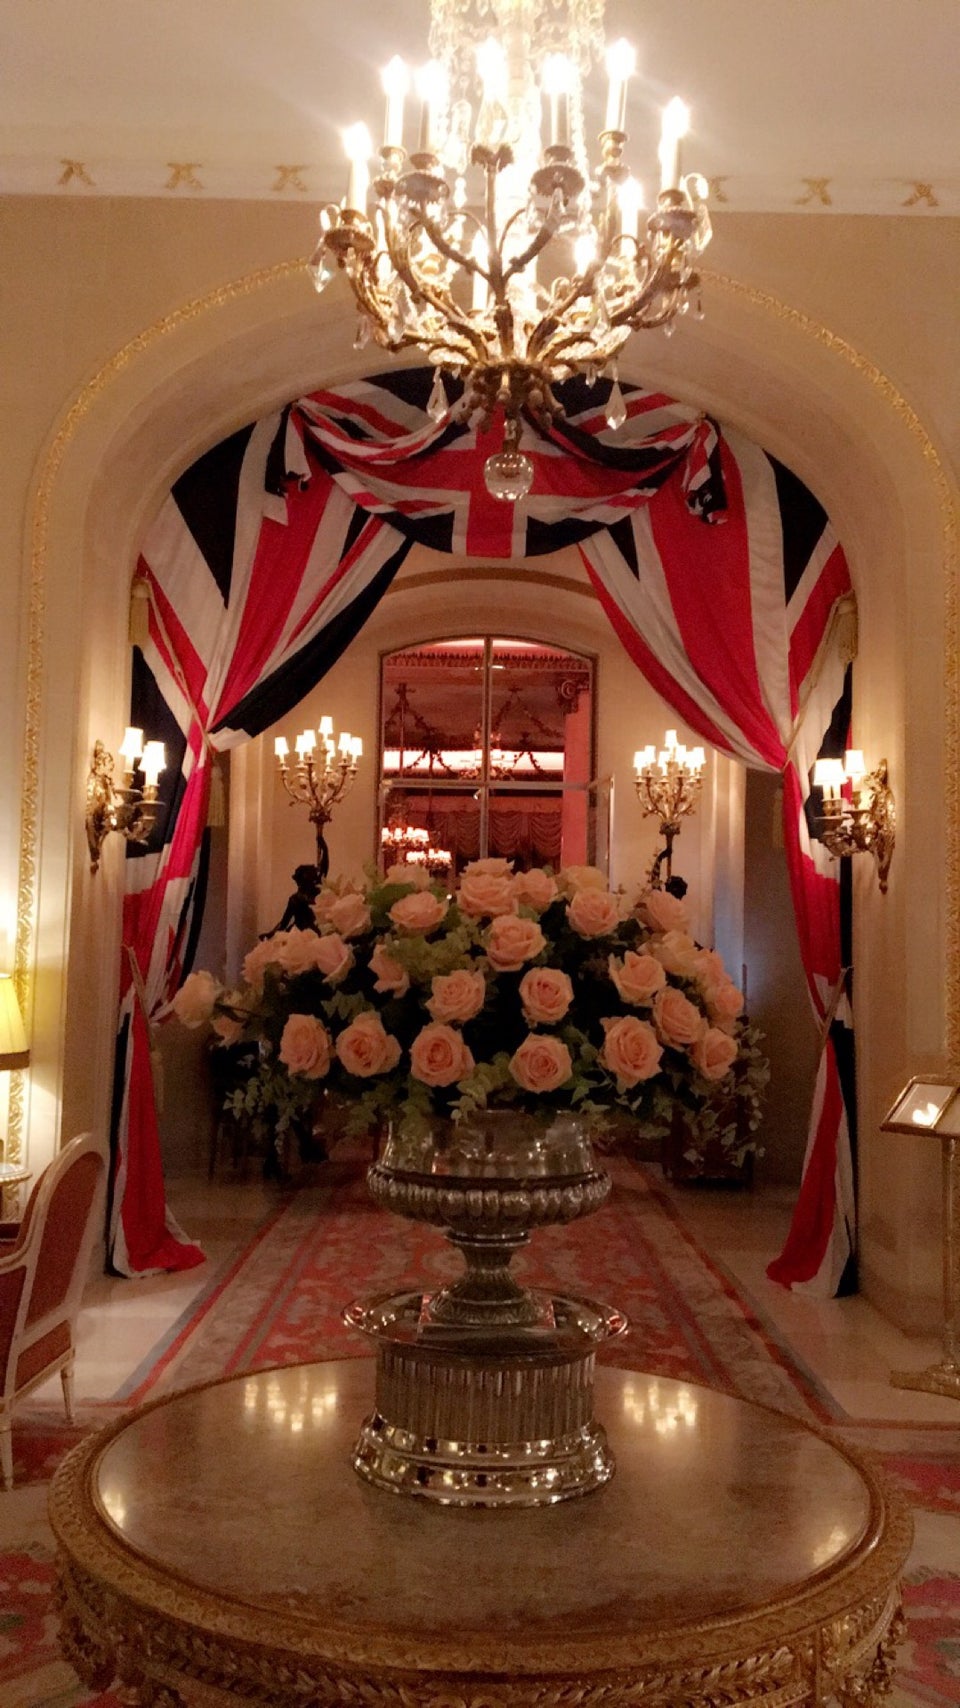 Photo of The Ritz London